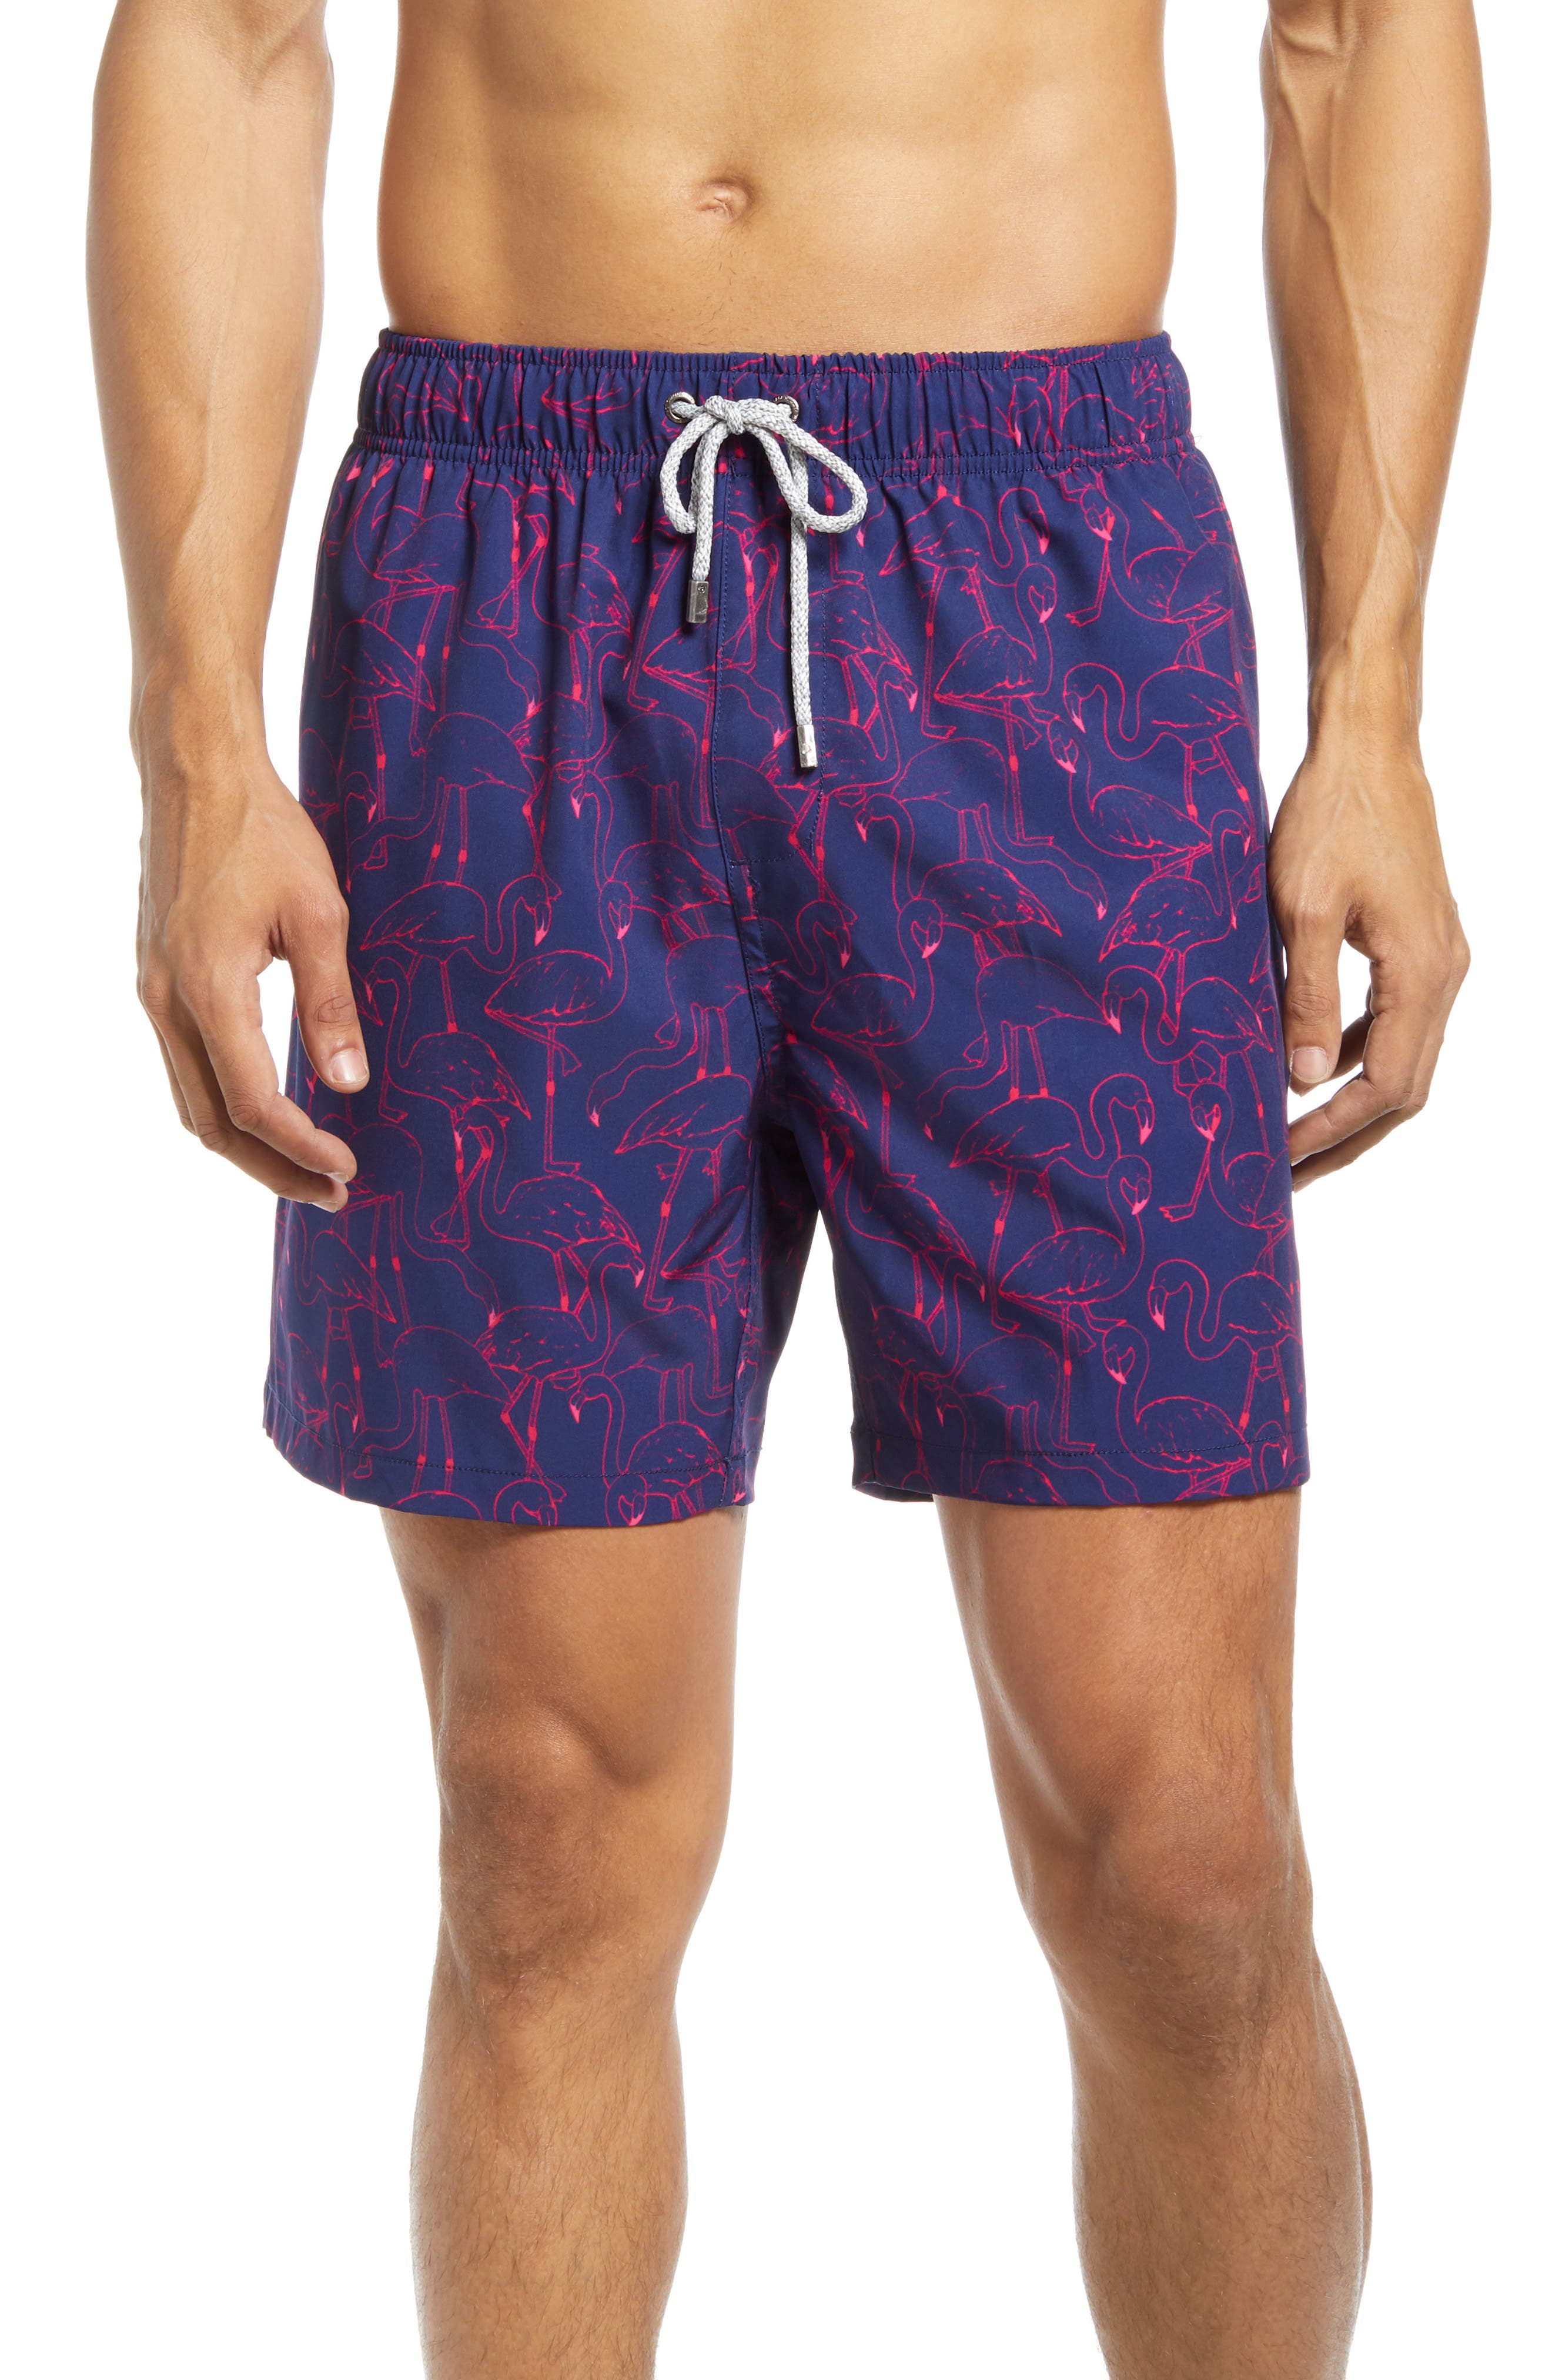 Flamingos Casual Summer Beach Board Shorts Pants for Men Teens 